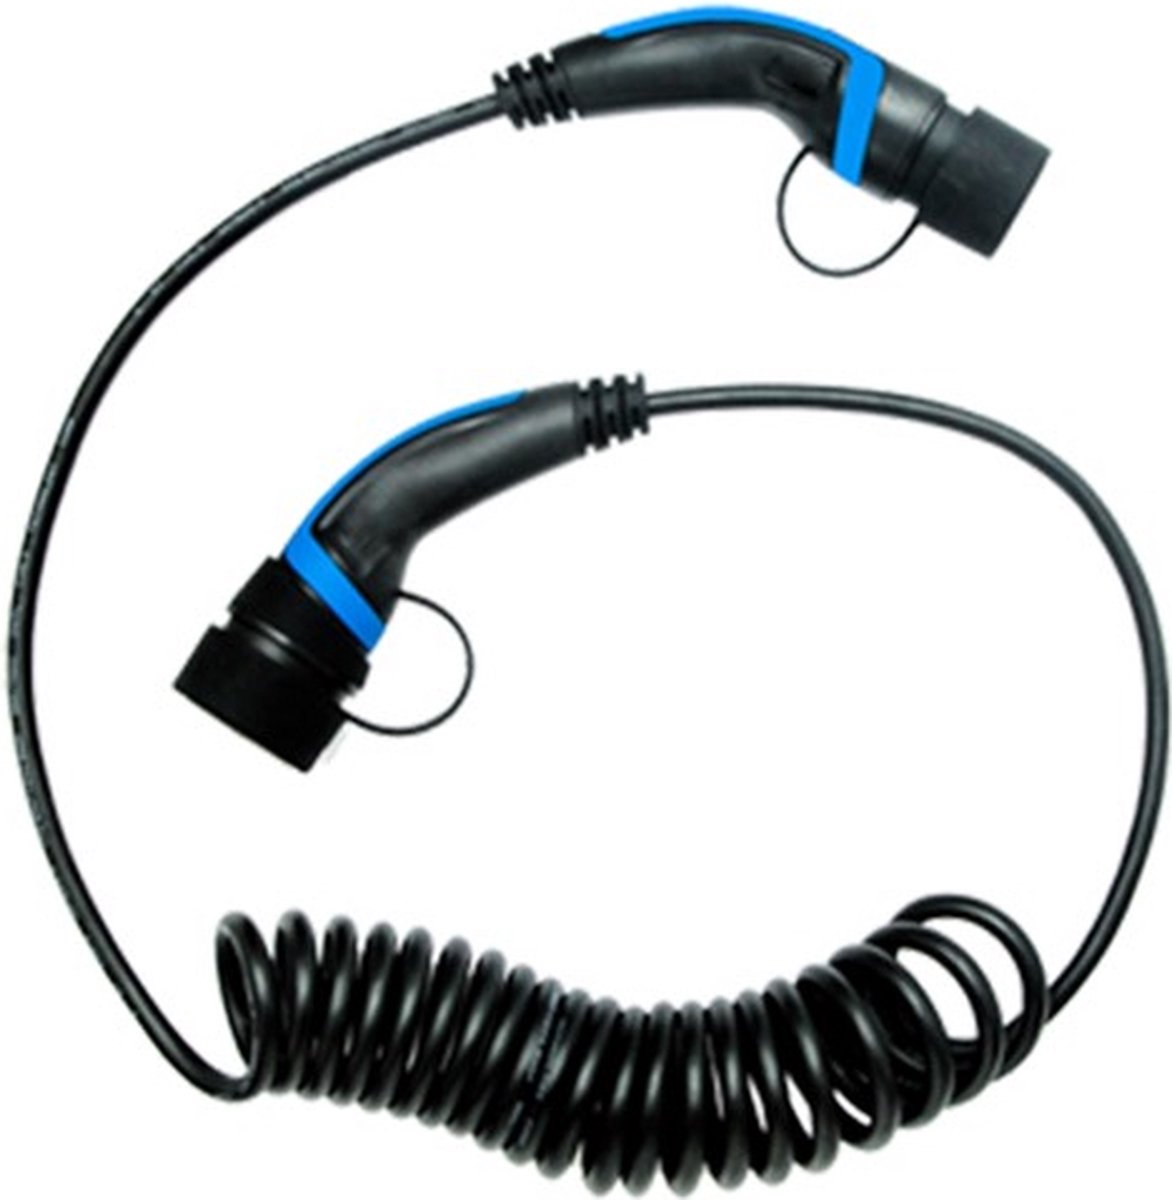 Apeks Electrical - Câble de charge EV en spirale enroulée - Type 2